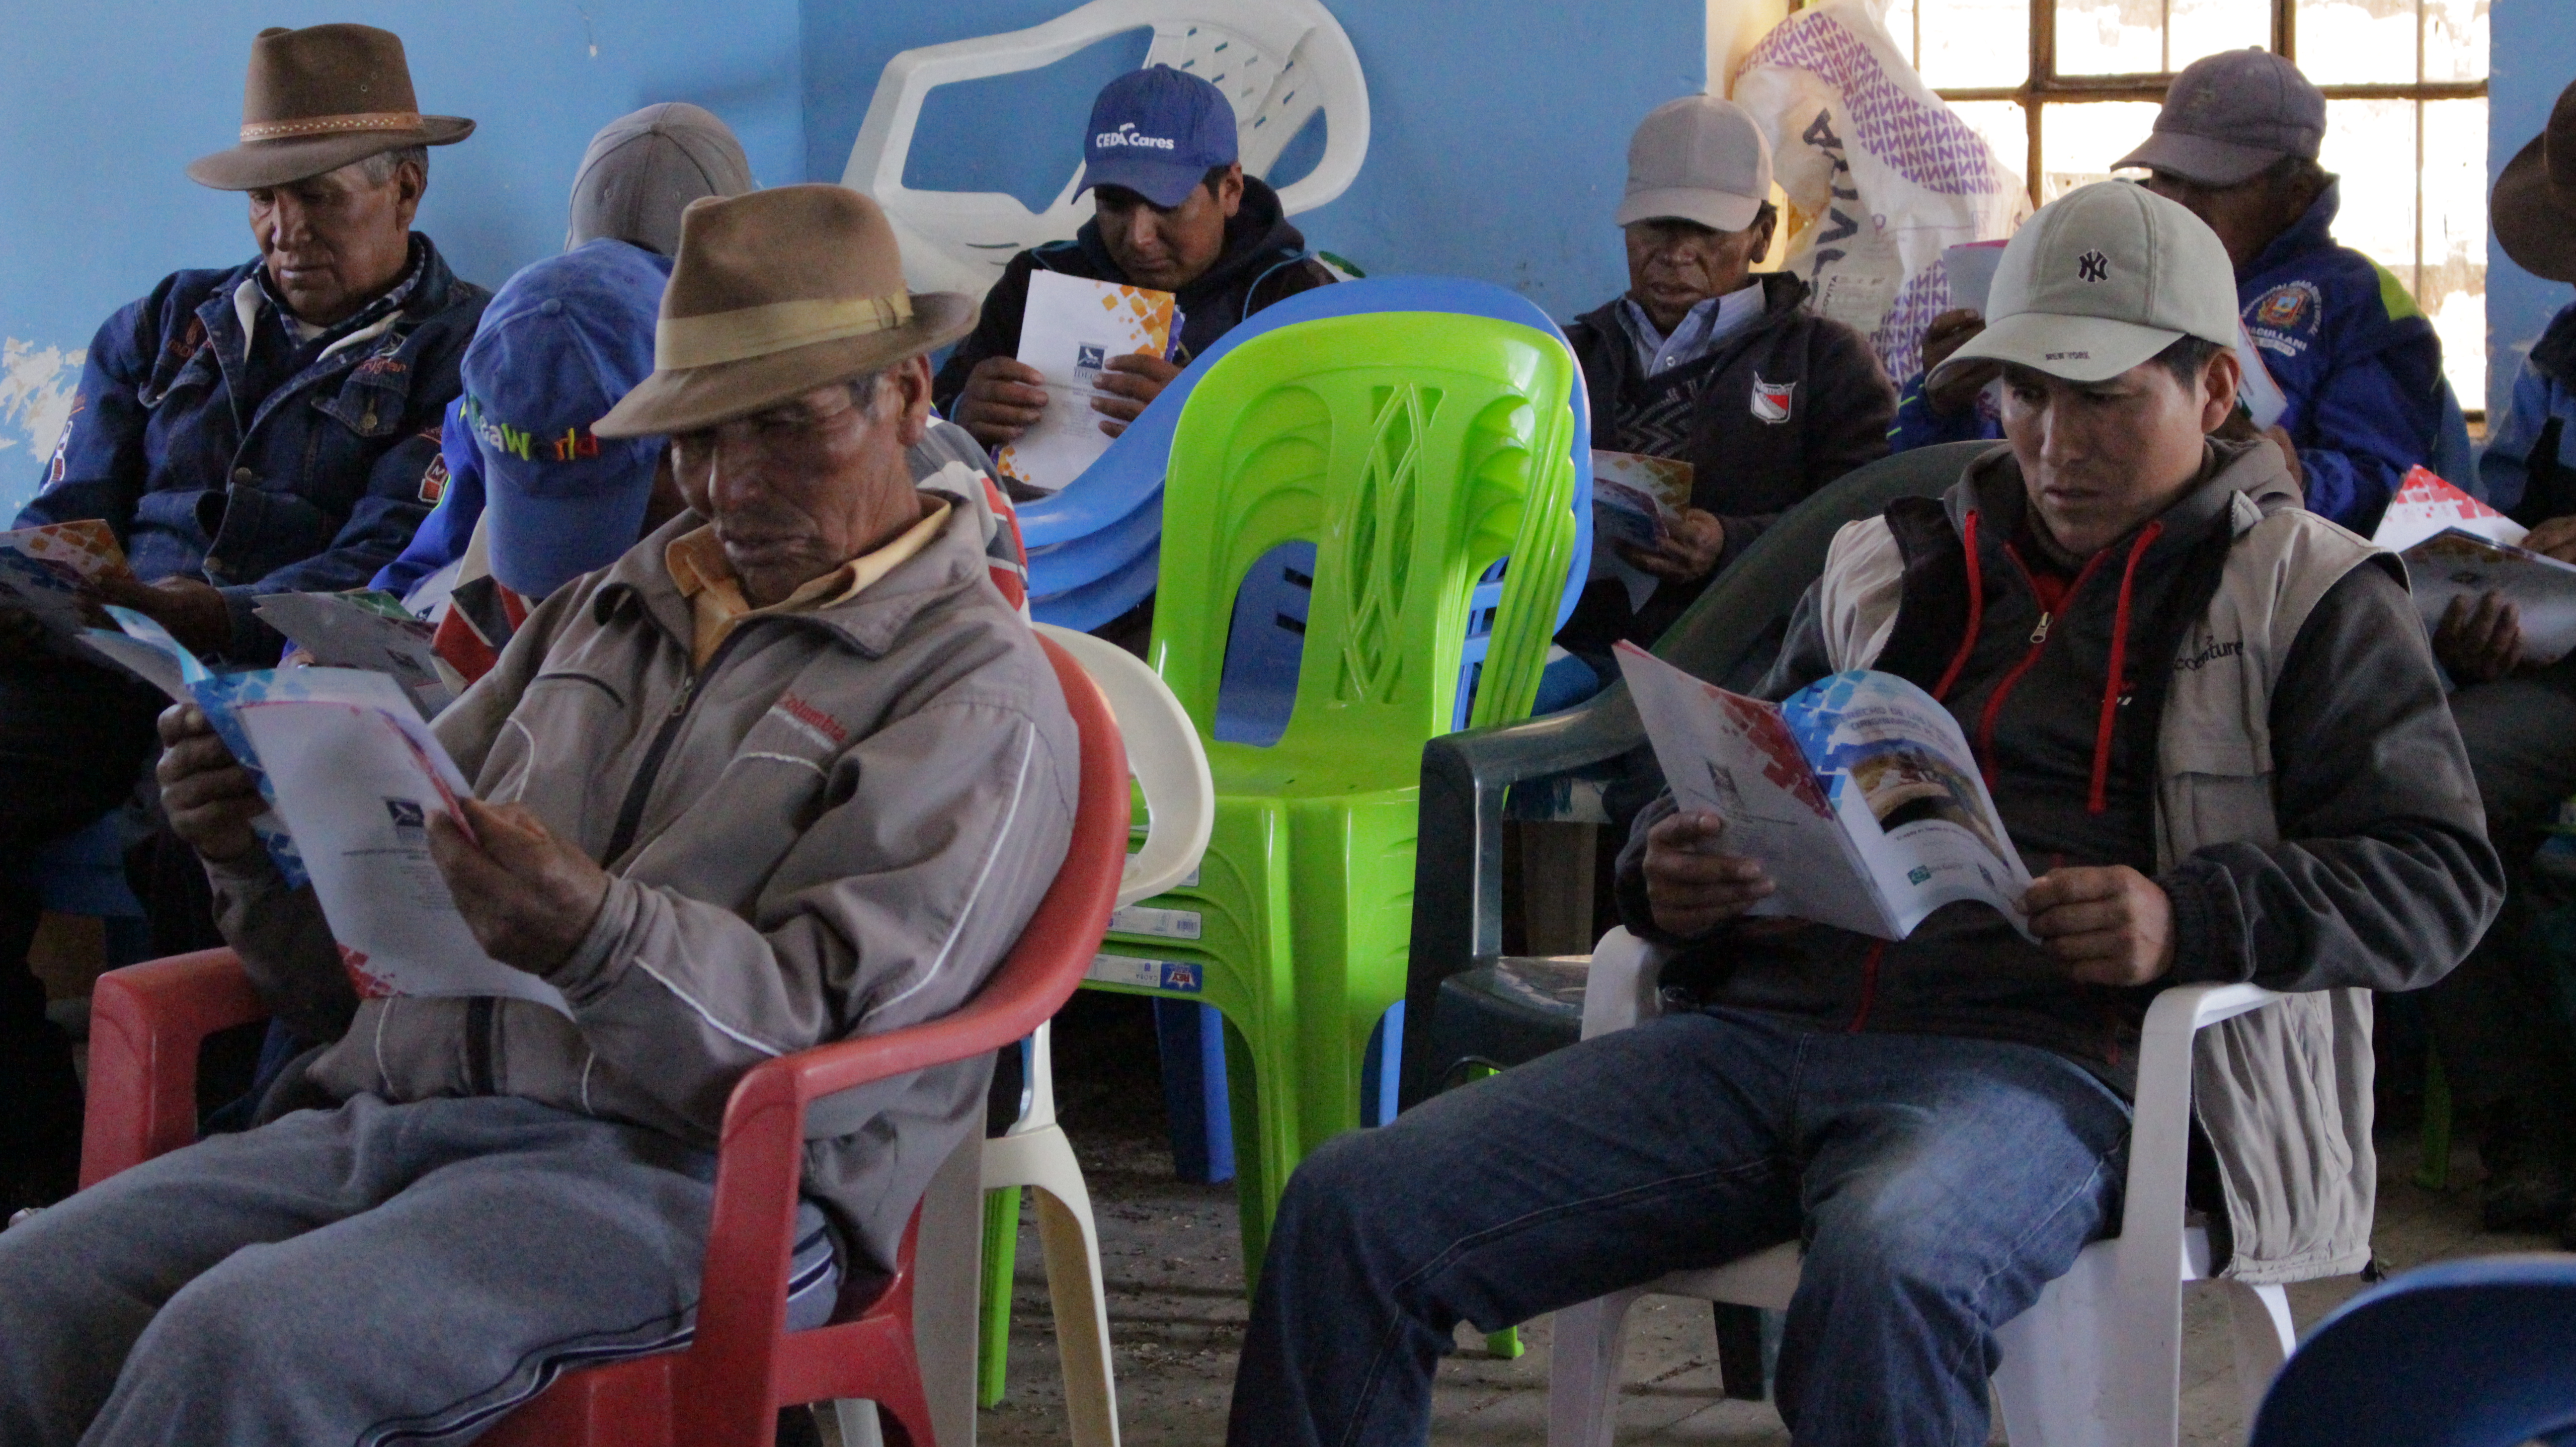 Taller sobre “Derecho a la Consulta Previa, Libre e Informada” en la Comunidad de Callaza Huacullani